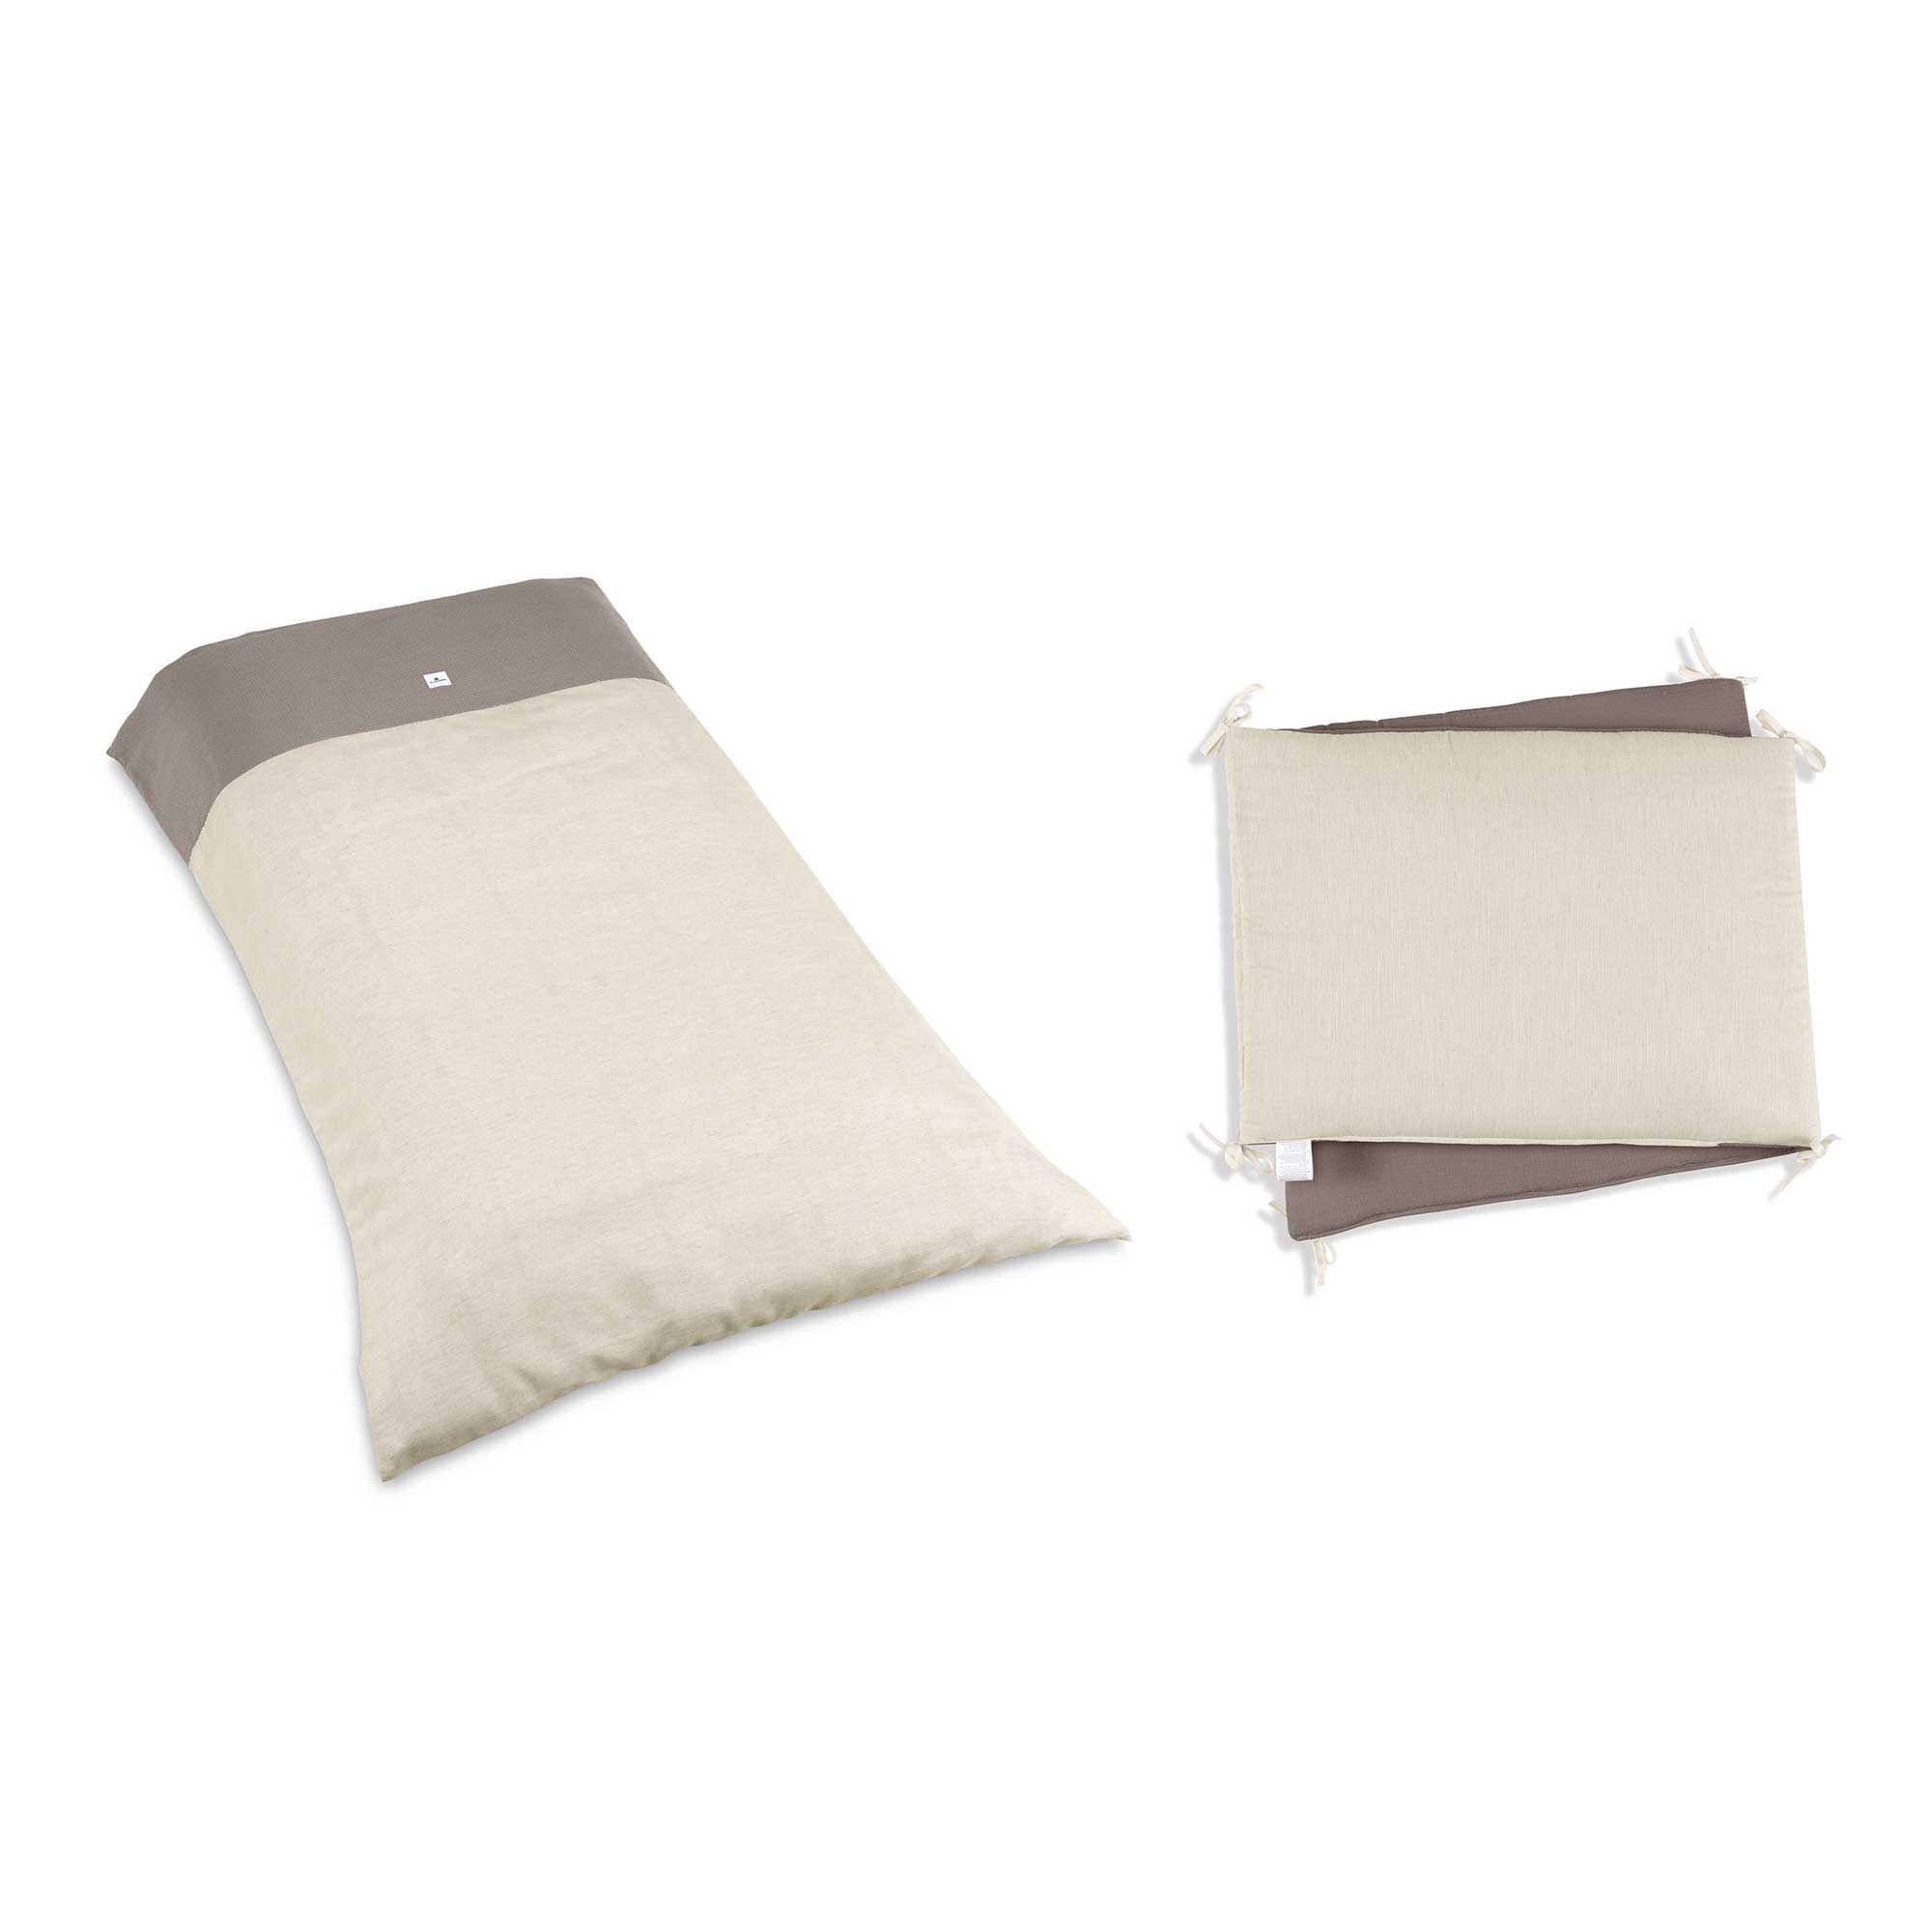 Set textil nórdico y chichonera beige/arena para cuna 60x120